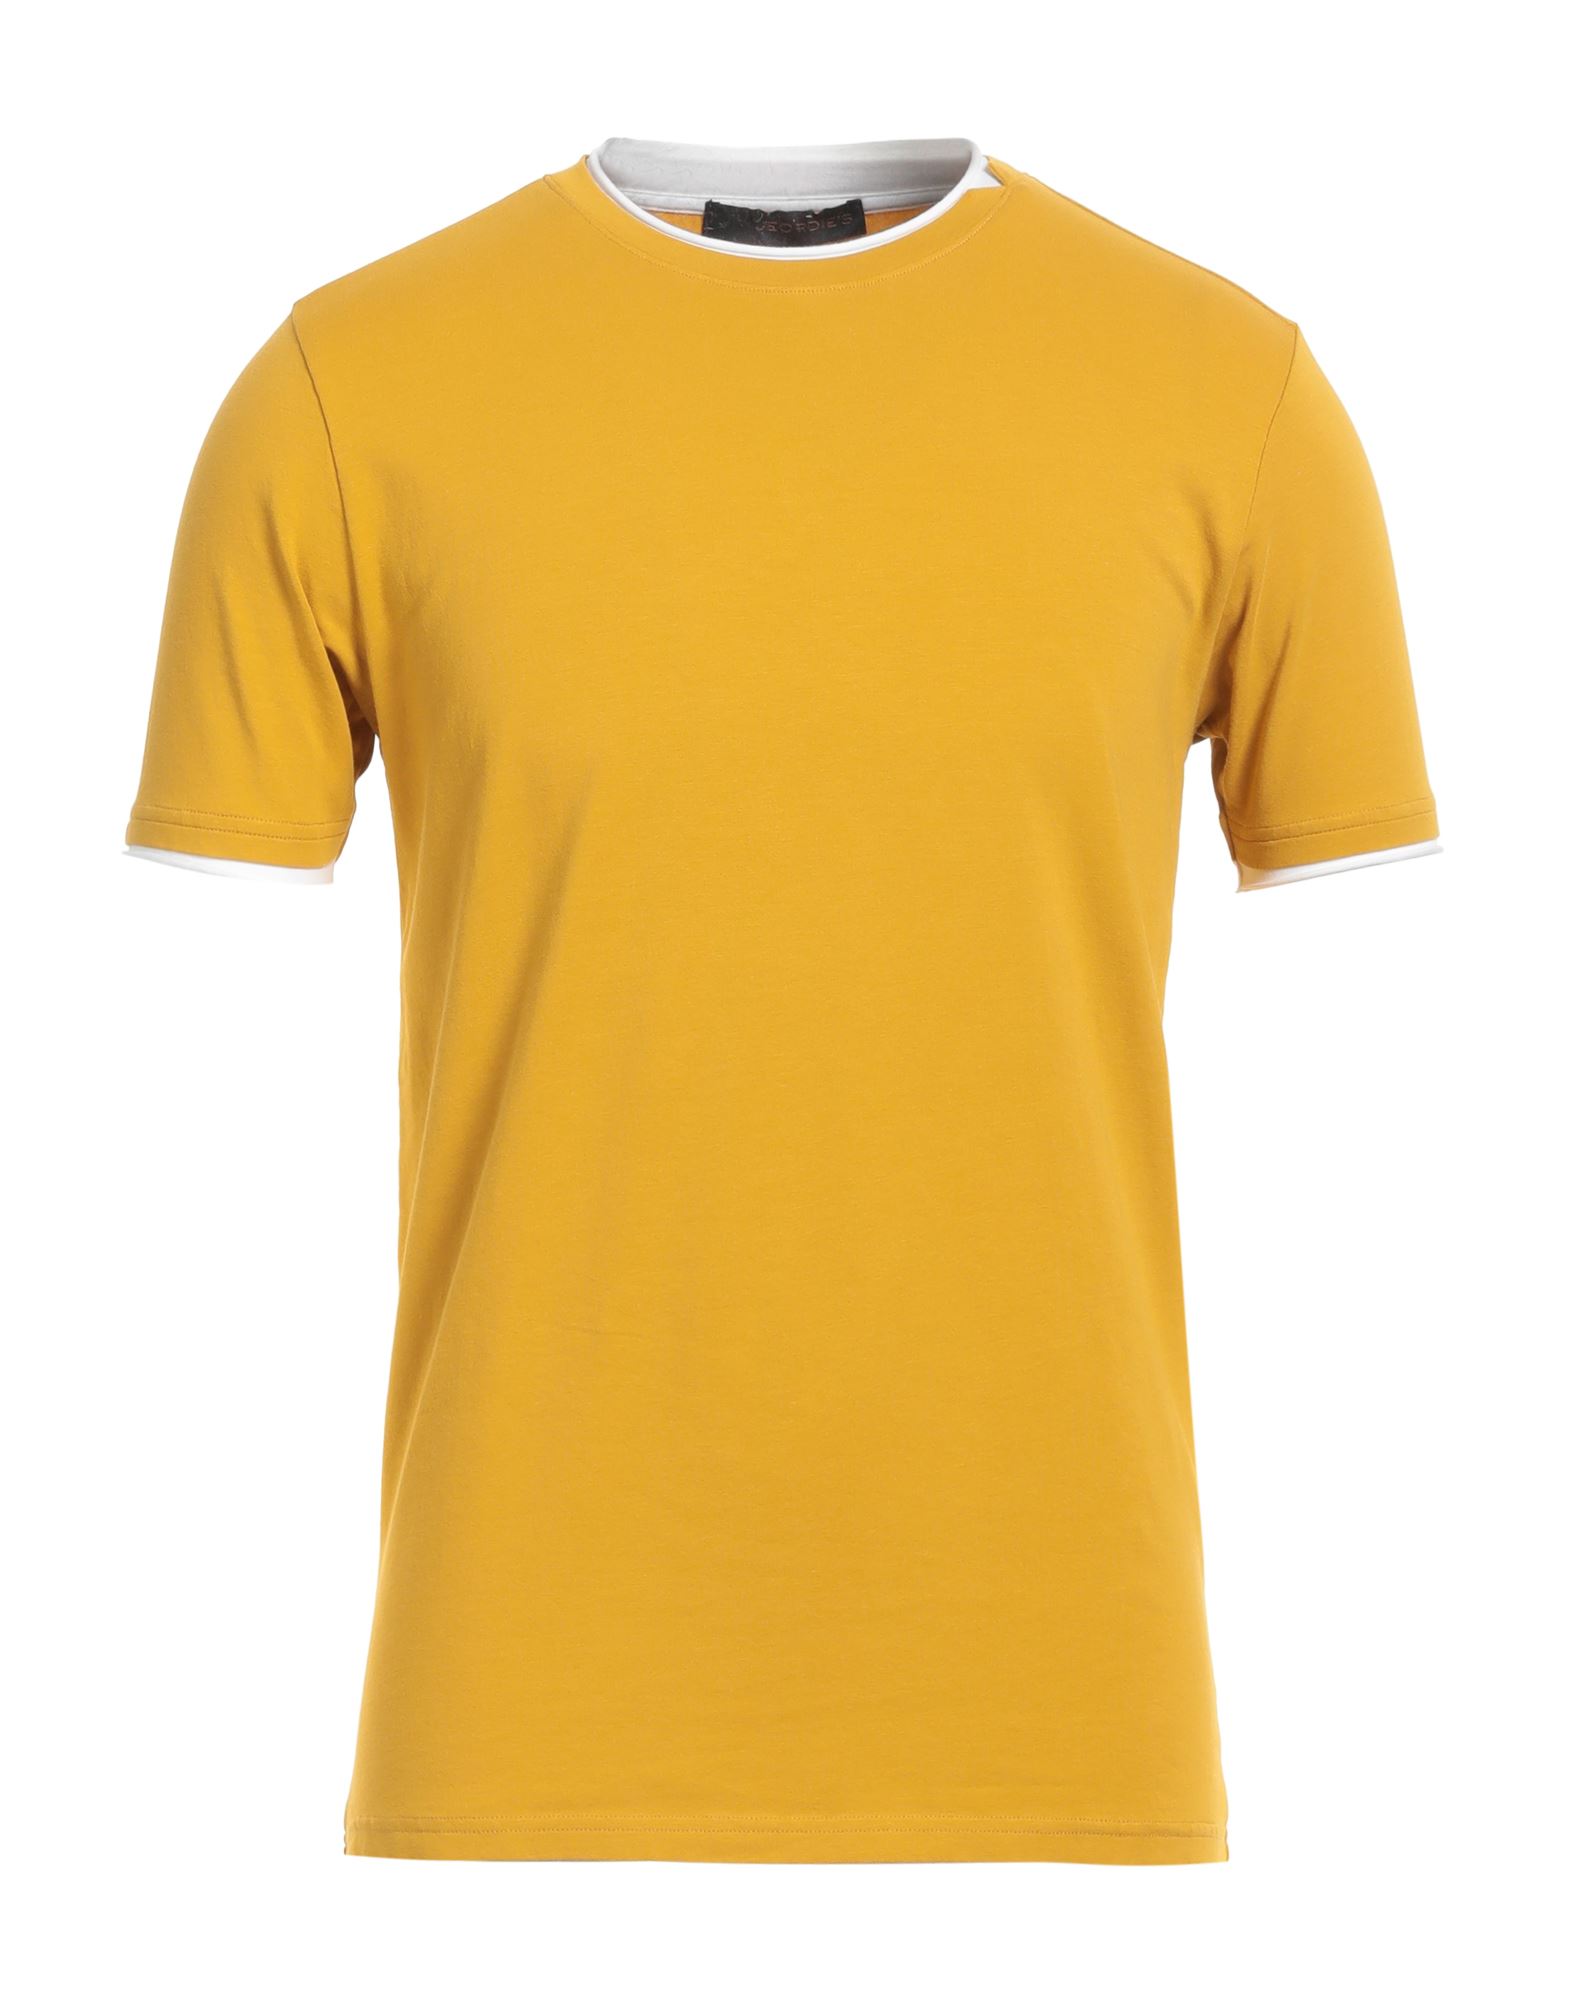 Jeordie's Man T-shirt Mustard Size Xxl Cotton, Elastane In Yellow